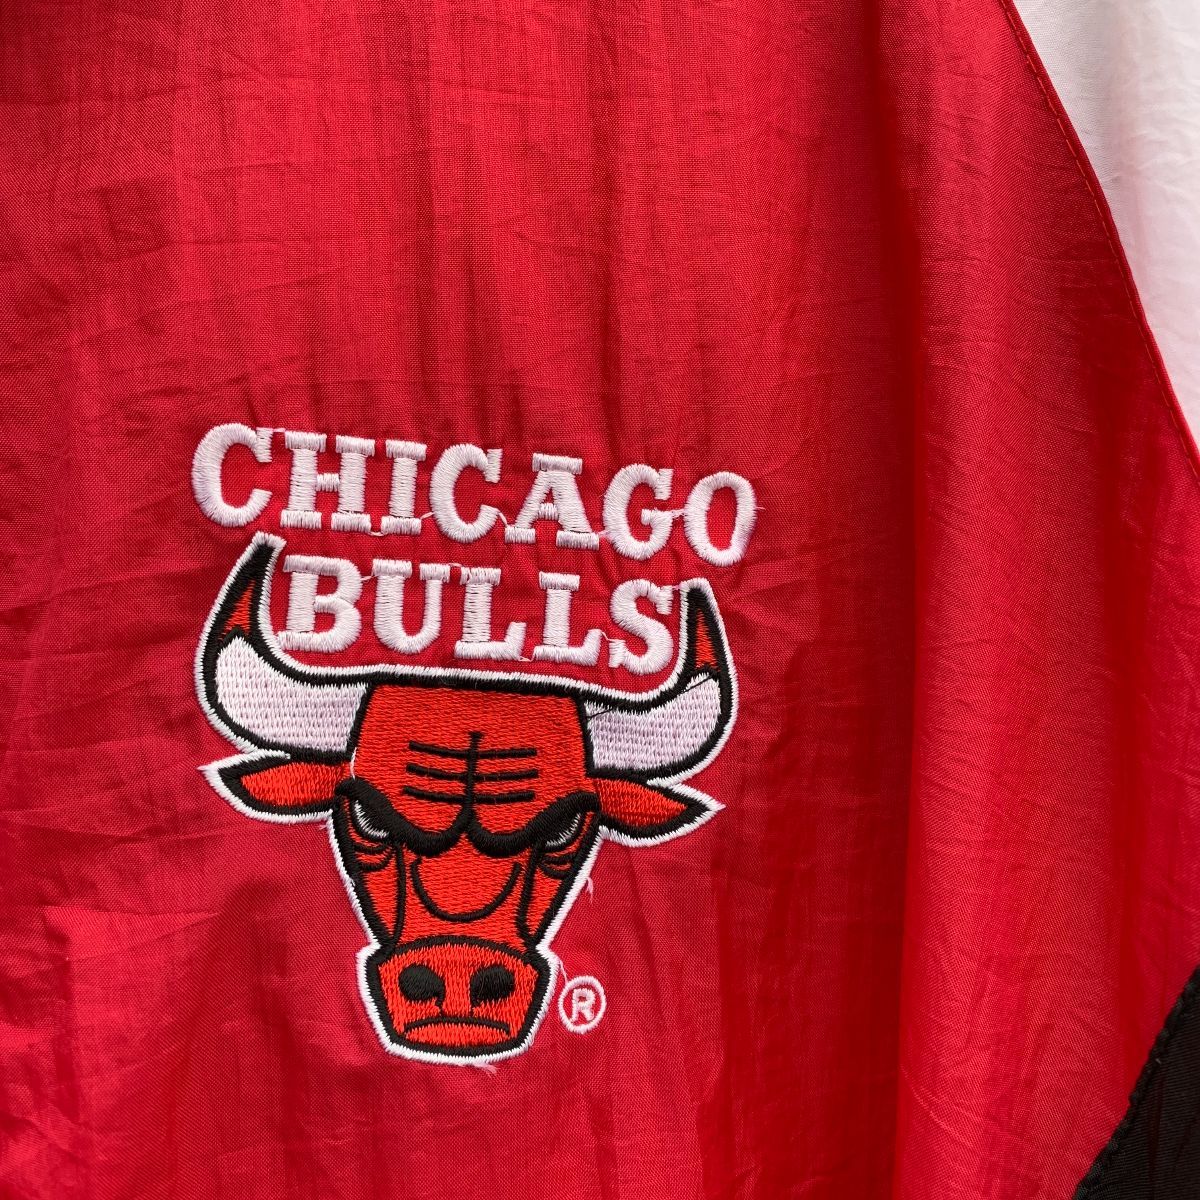 1990s Color-block Nba Chicago Bulls Windbreaker Jacket As-is